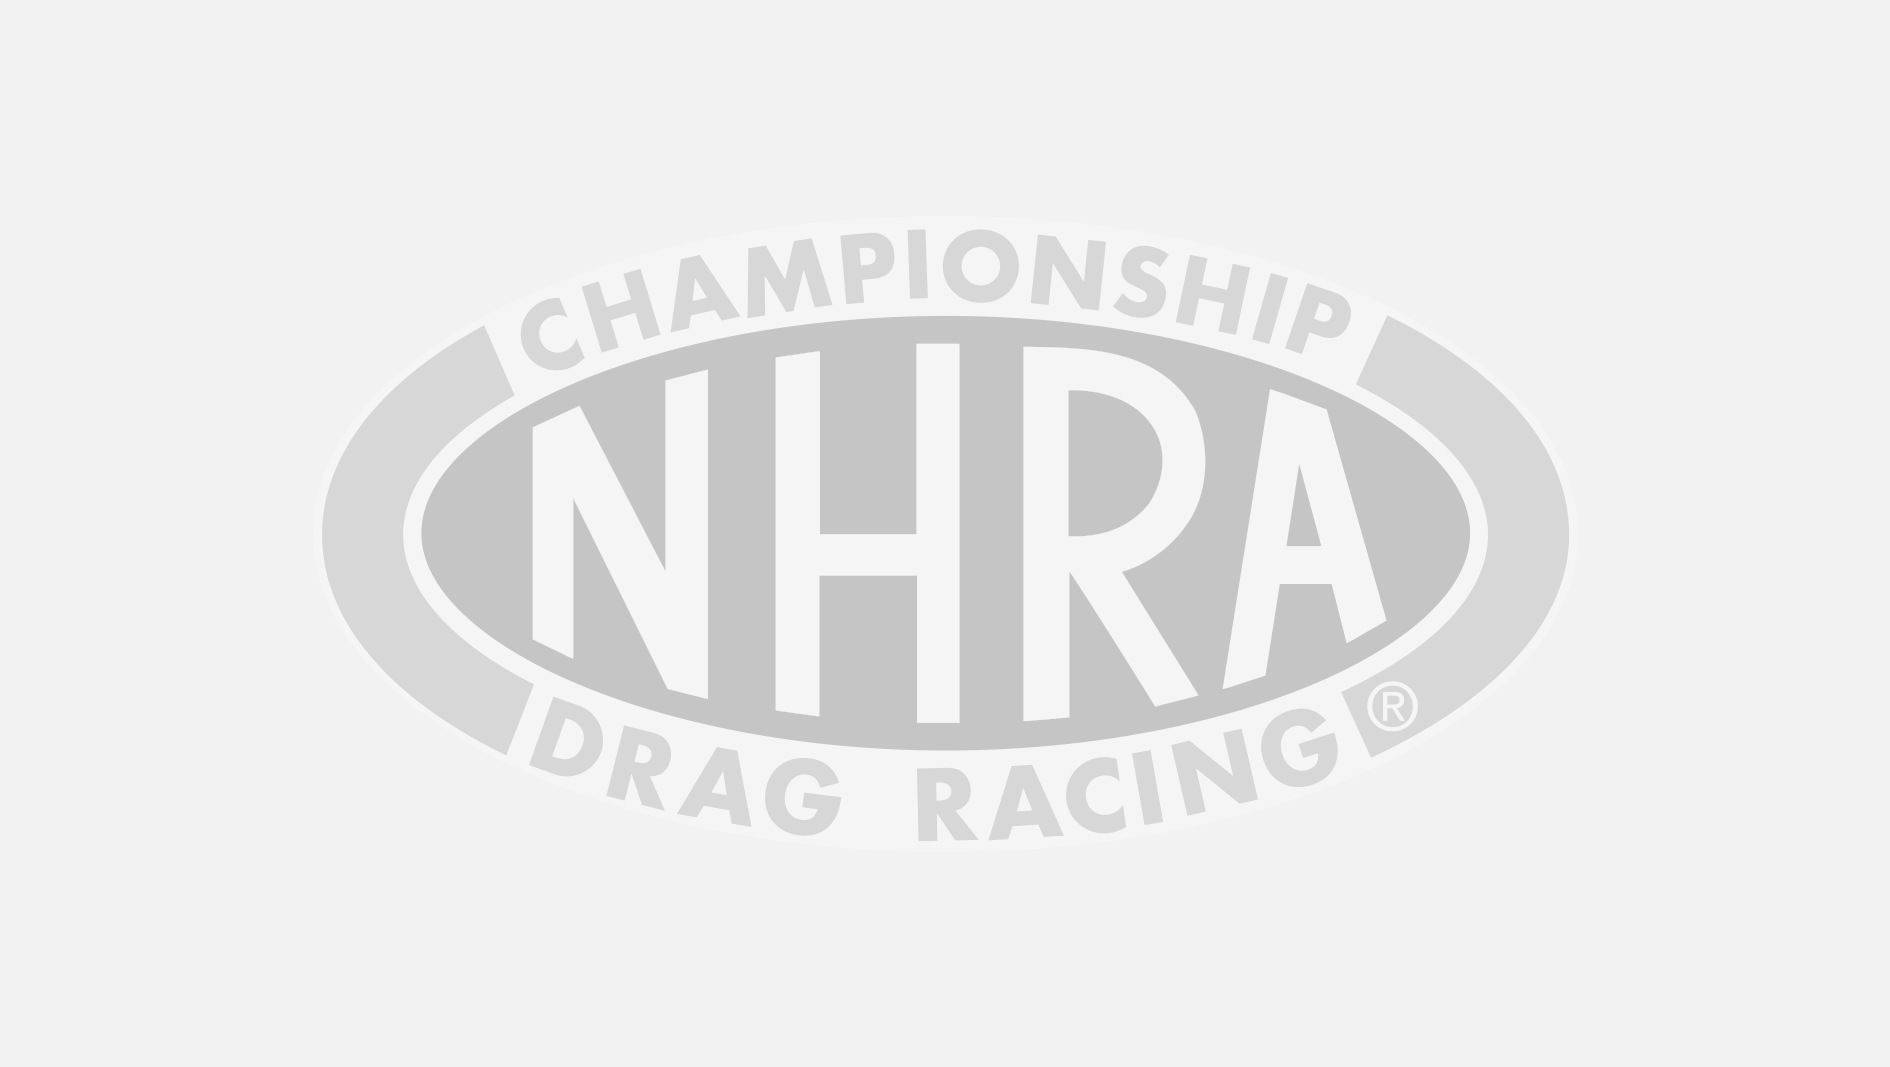 Breaking News: Troy Coughlin Jr. will race in Top Fuel in 2017